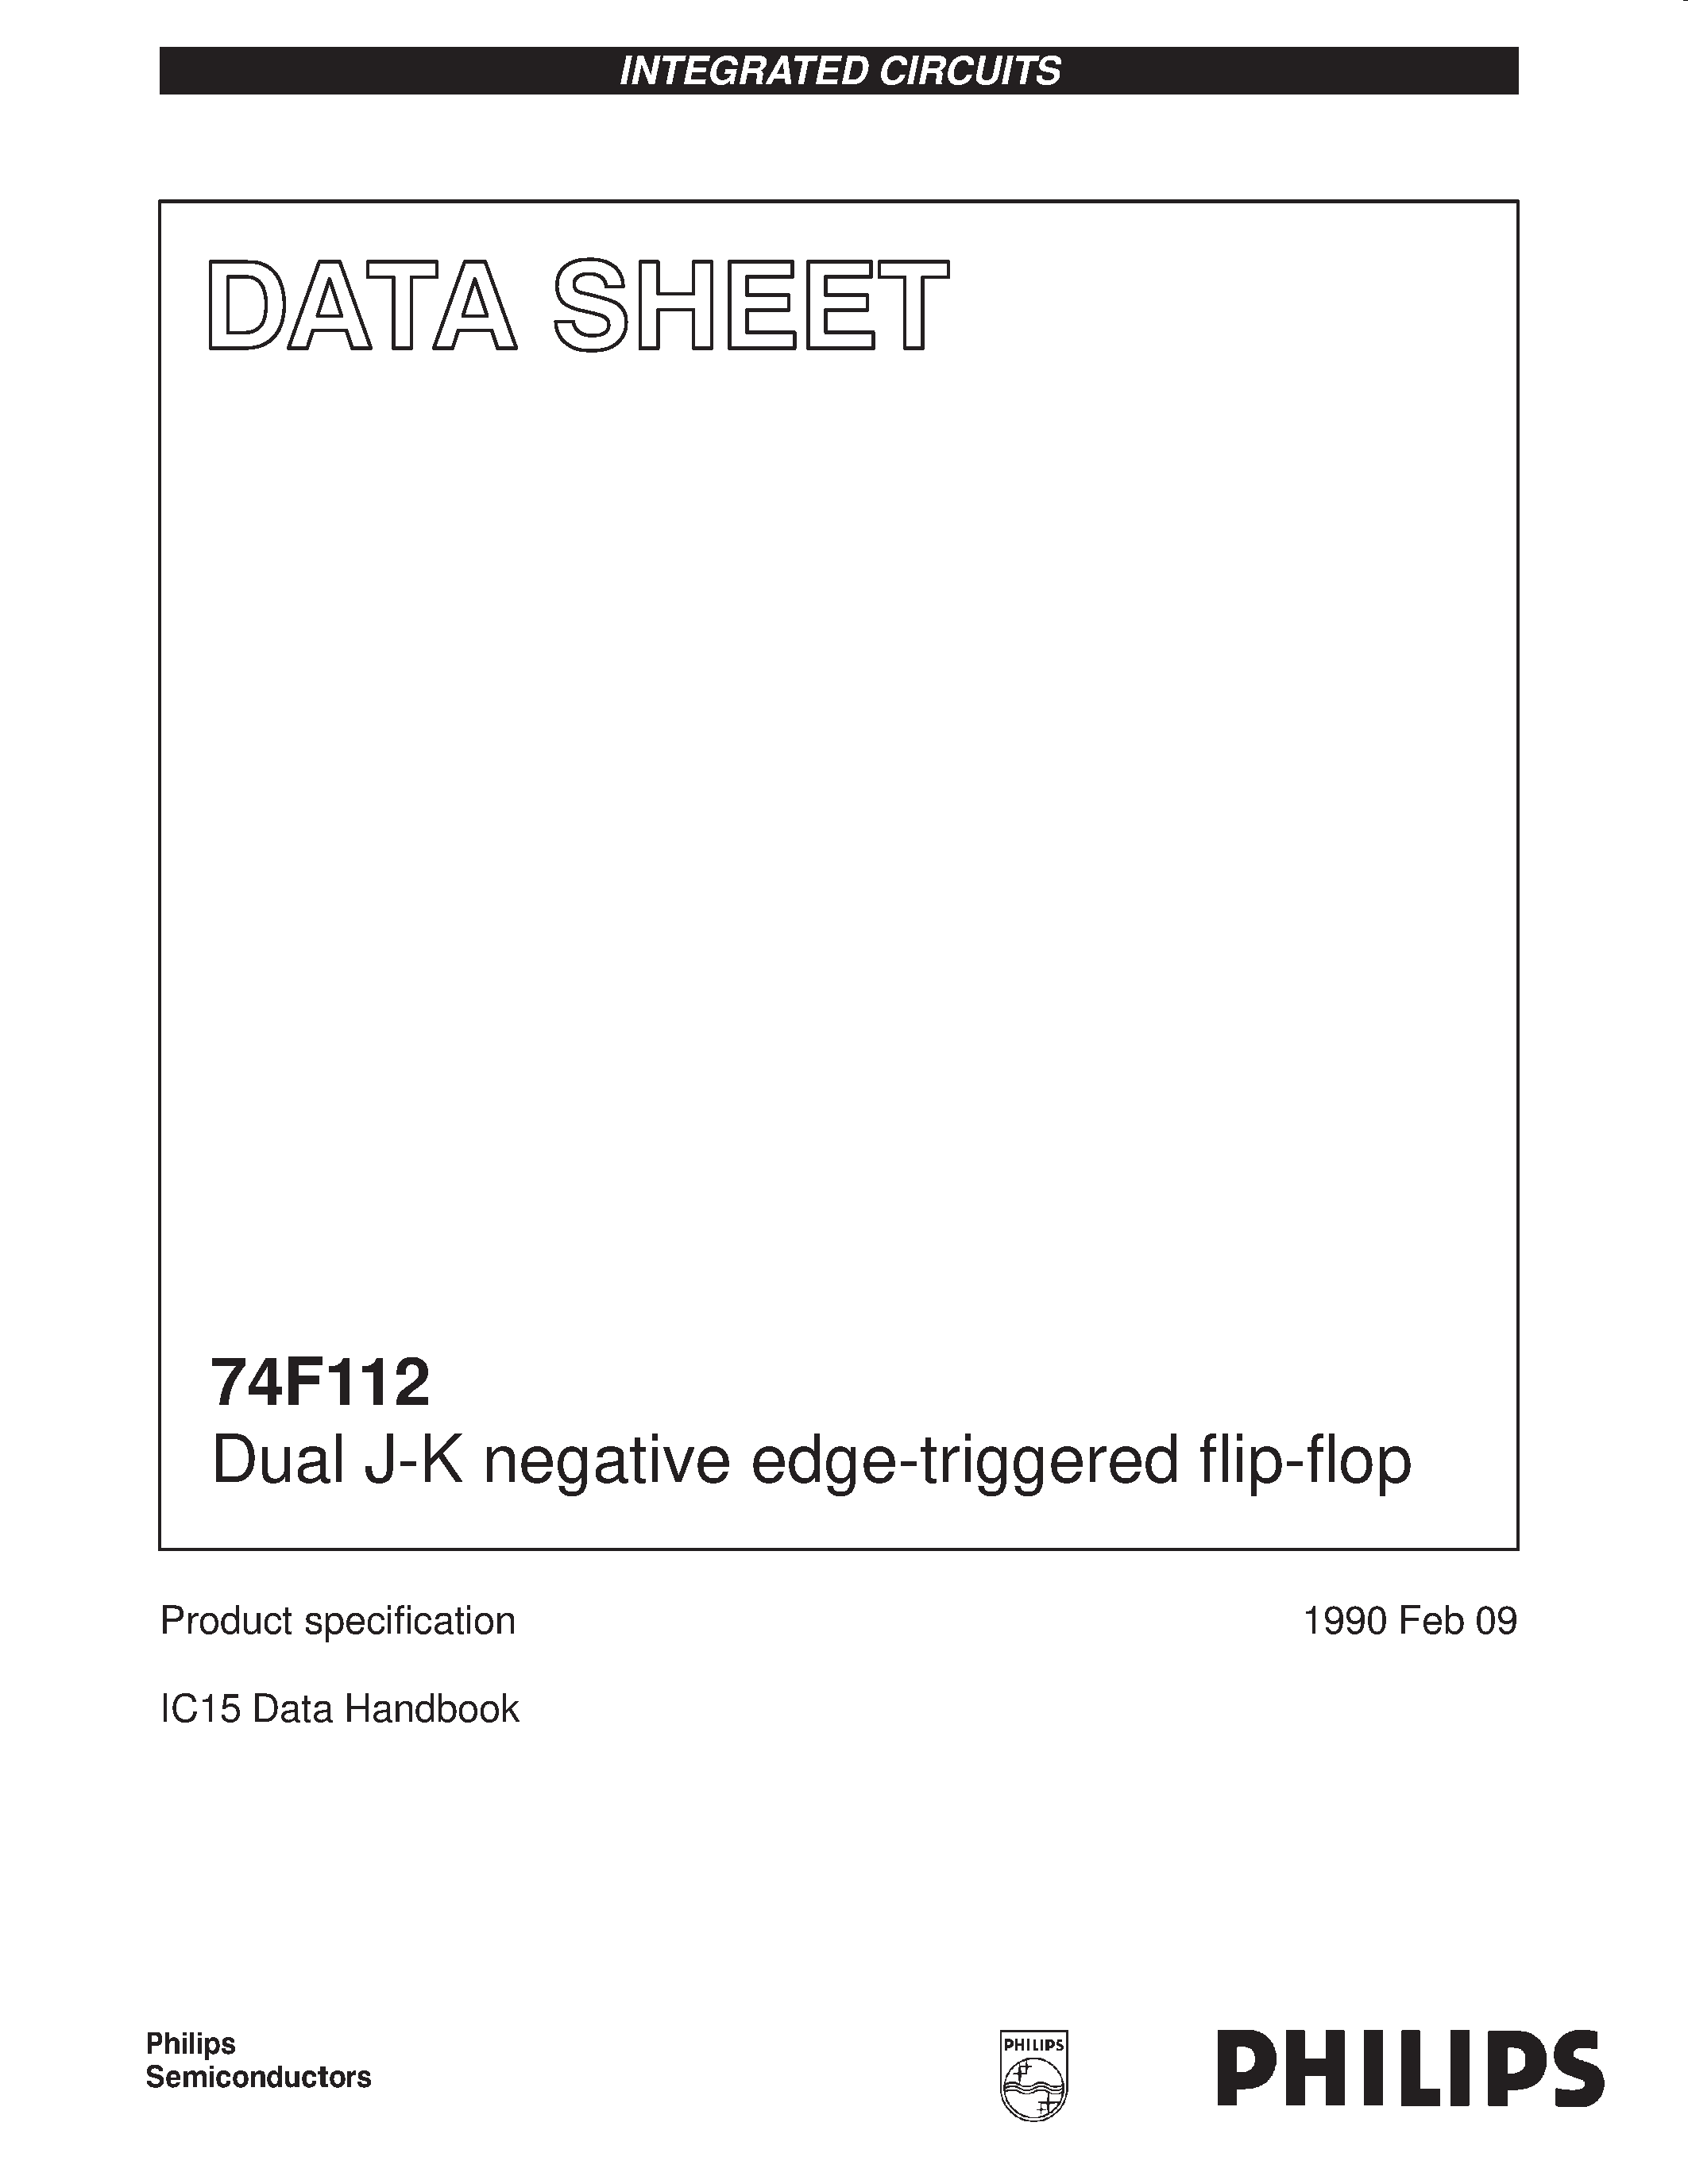 Даташит 74F112 - Dual J-K negative edge-triggered flip-flop страница 1